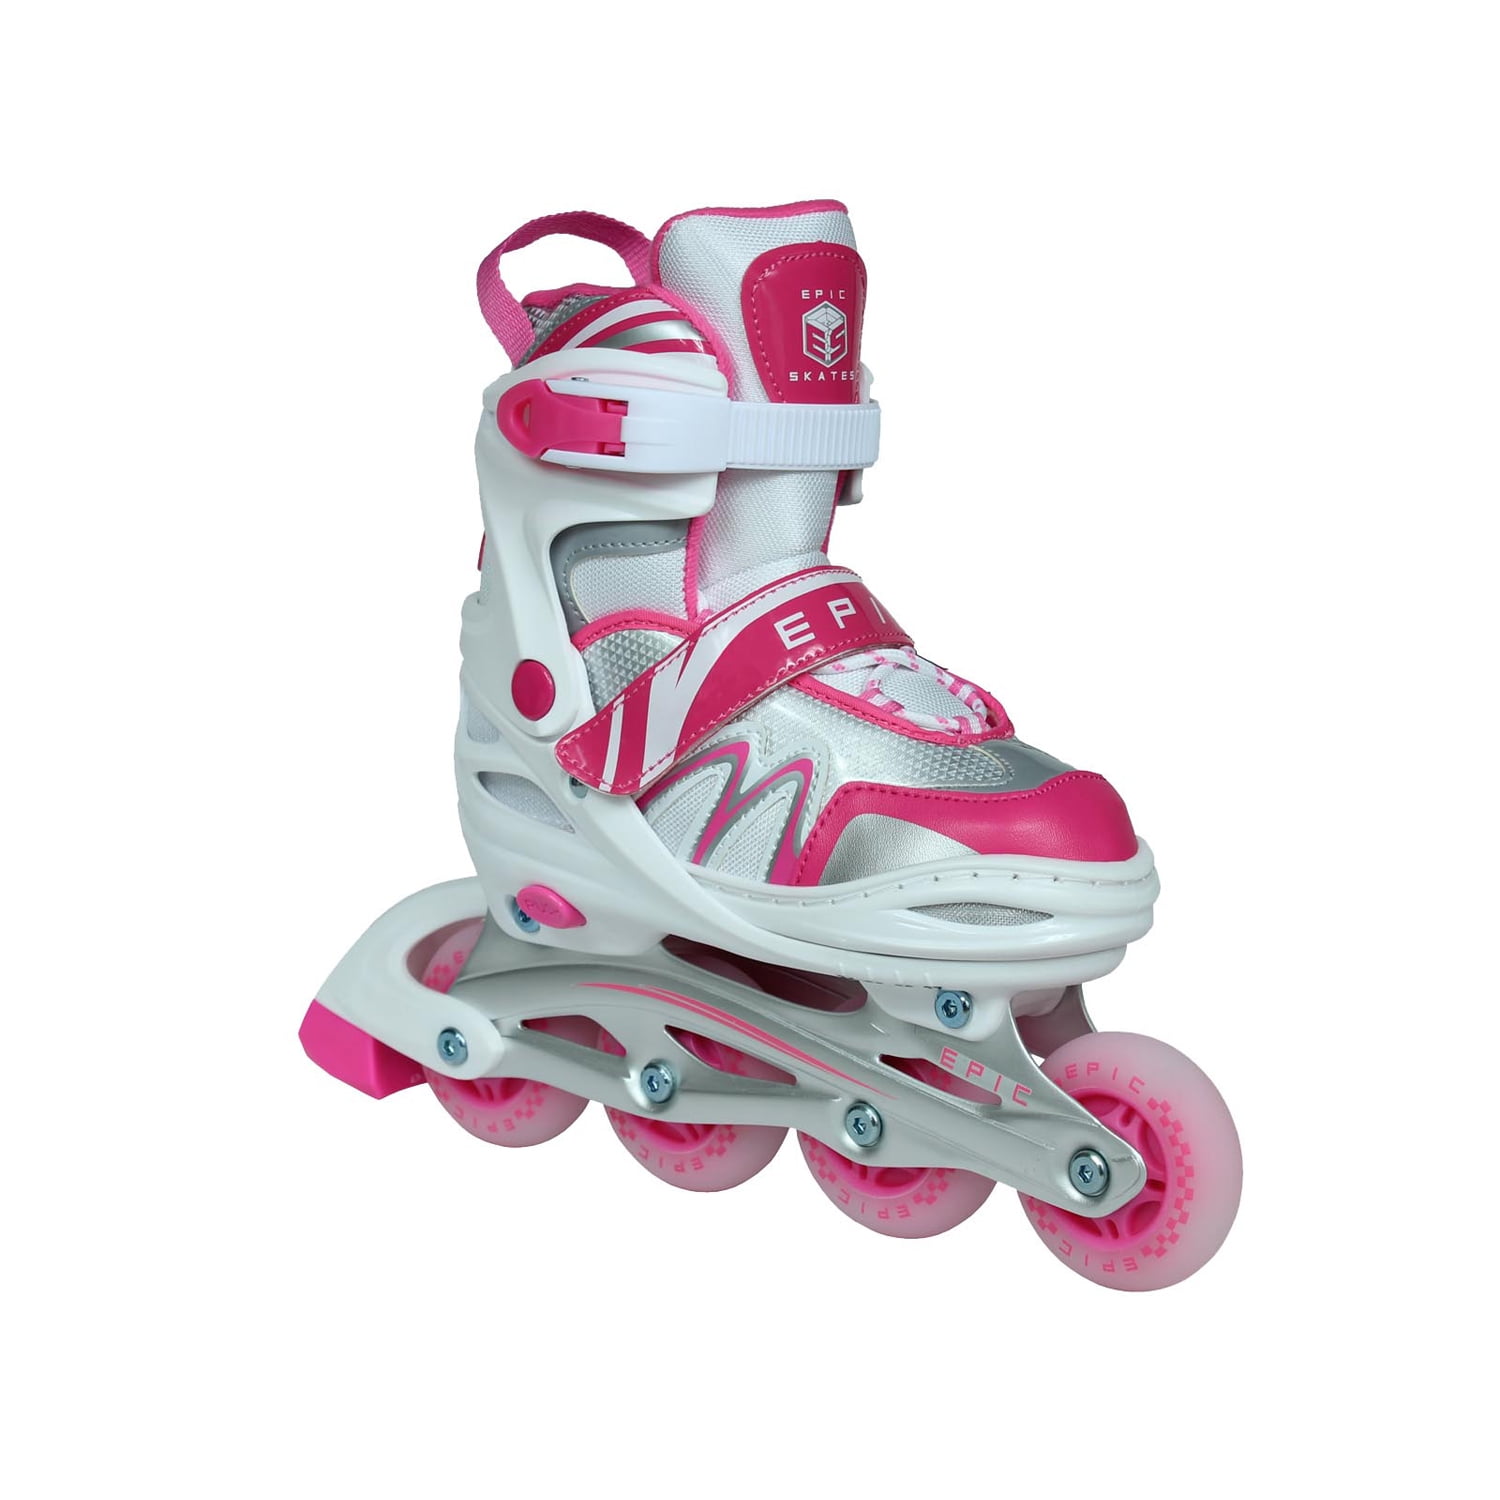 Tuko Kids Adjustable Inline Skates for Boys/Girls Roller Skates Illuminating Wheels Blades Patines para Niños 